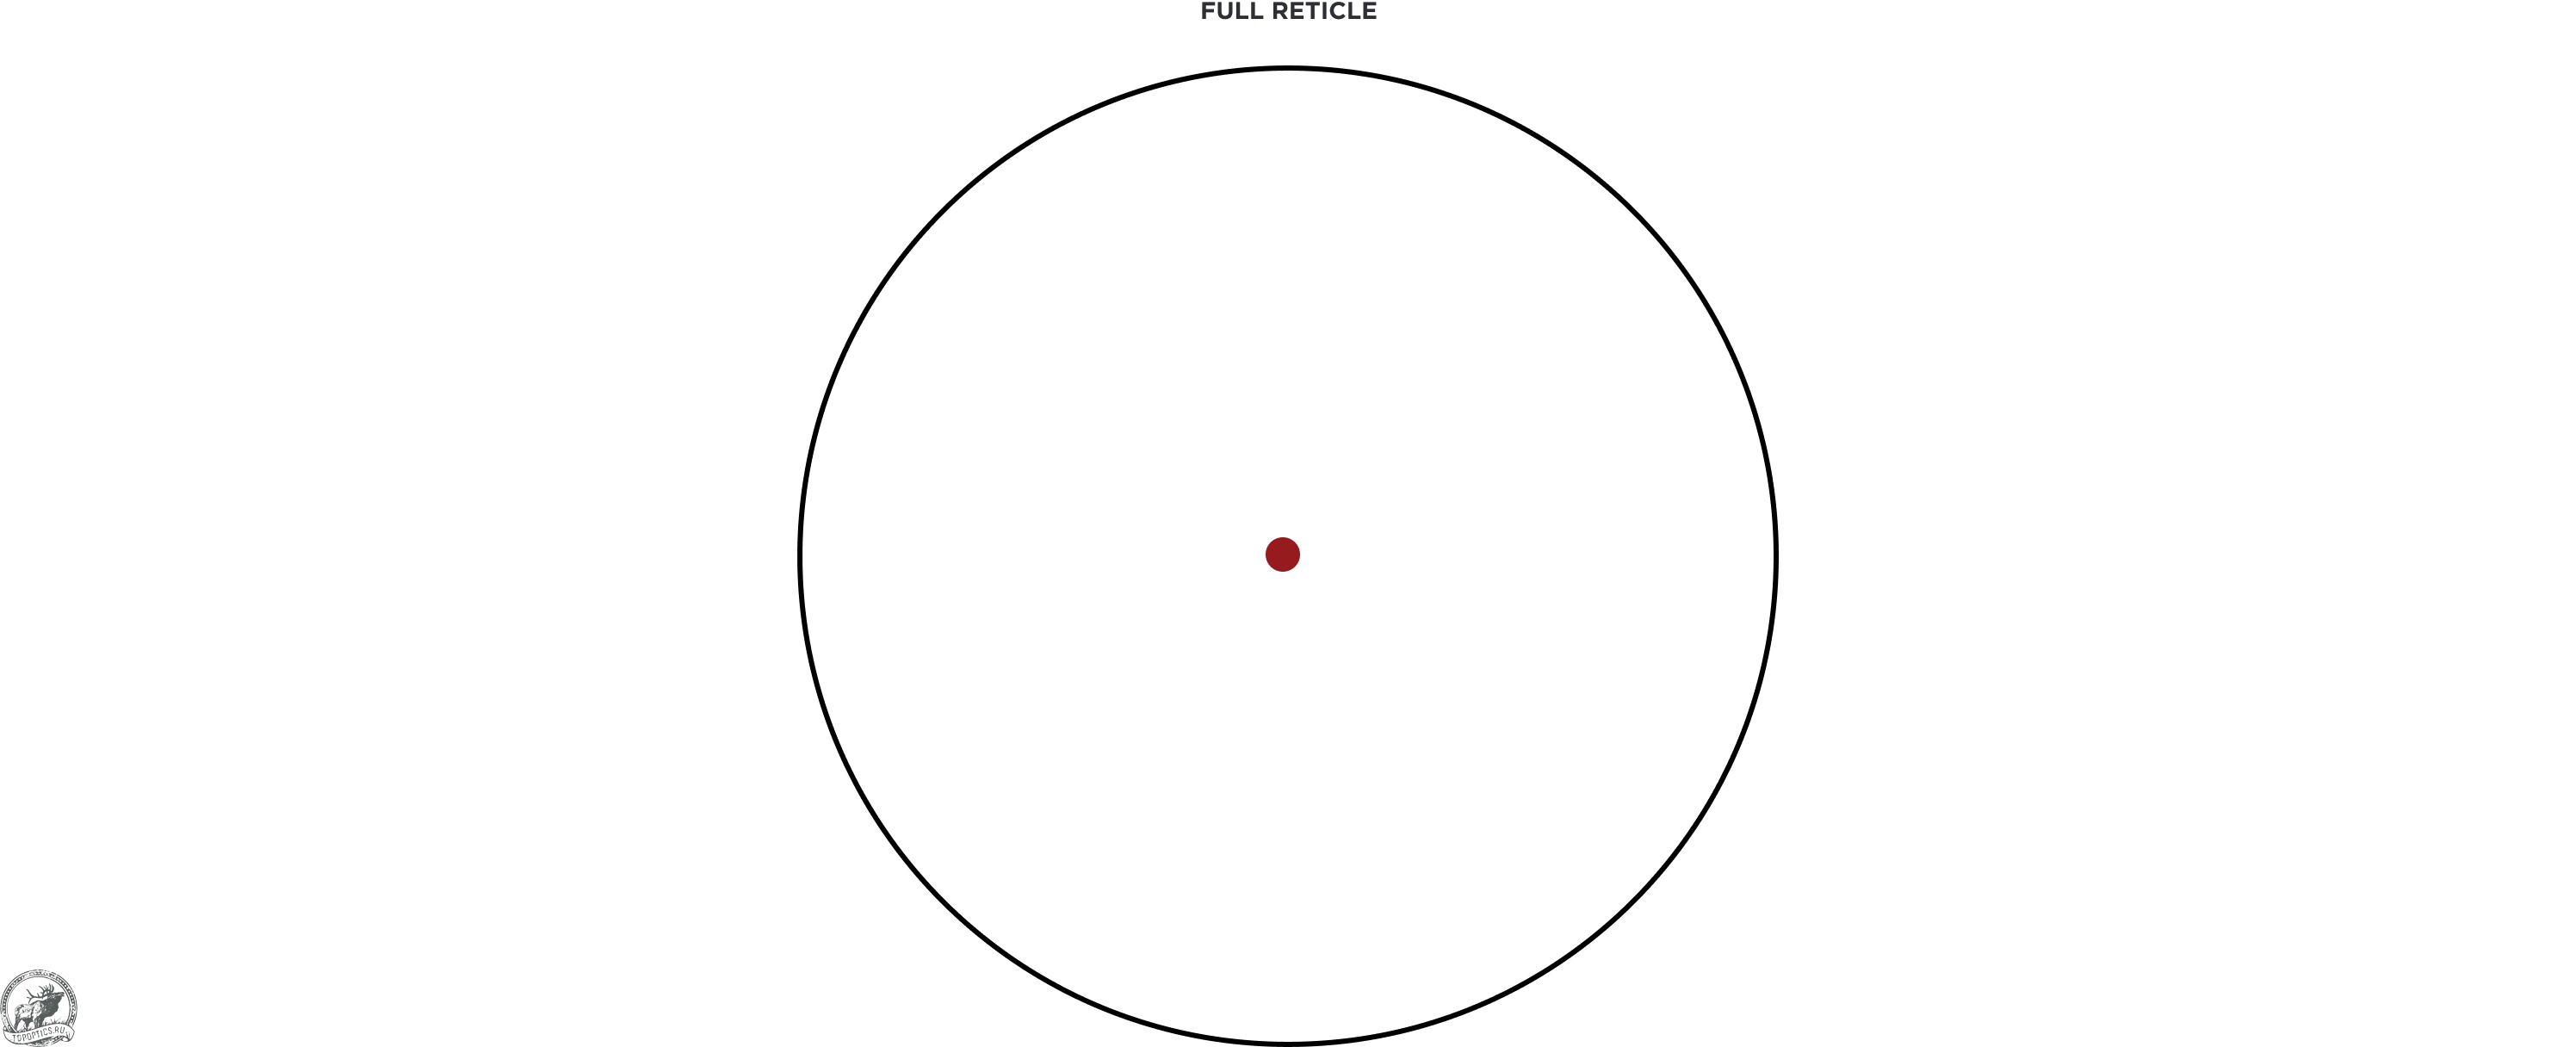 Коллиматорный прицел Leupold Freedom RDS 1x34 Red Dot Sight 1 MOA #180091